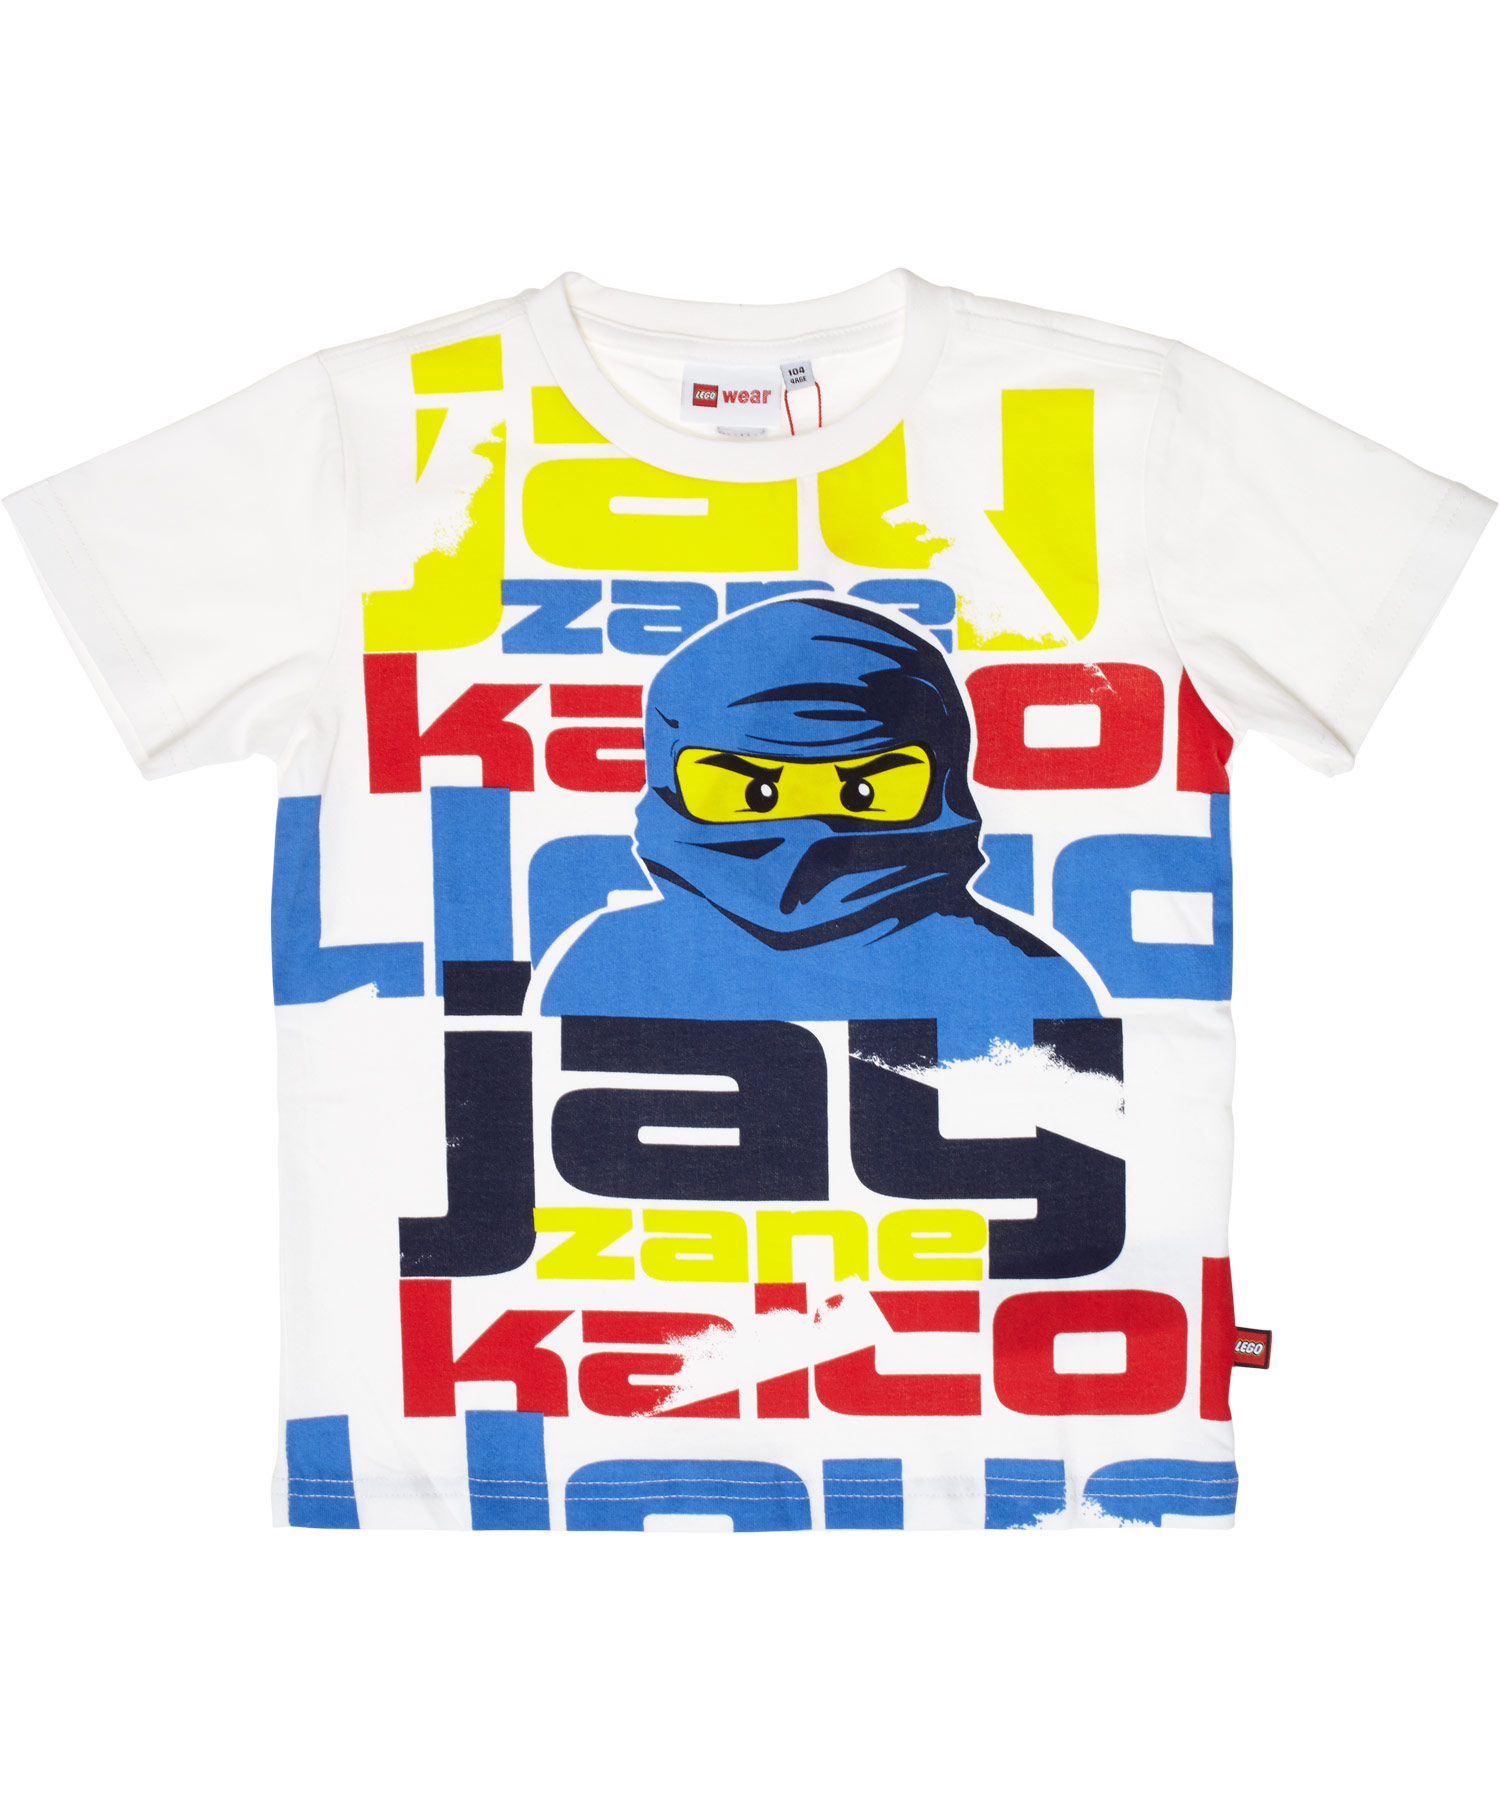 New! LEGO superb white Ninjago t-shirt with Jay, the blue ninja